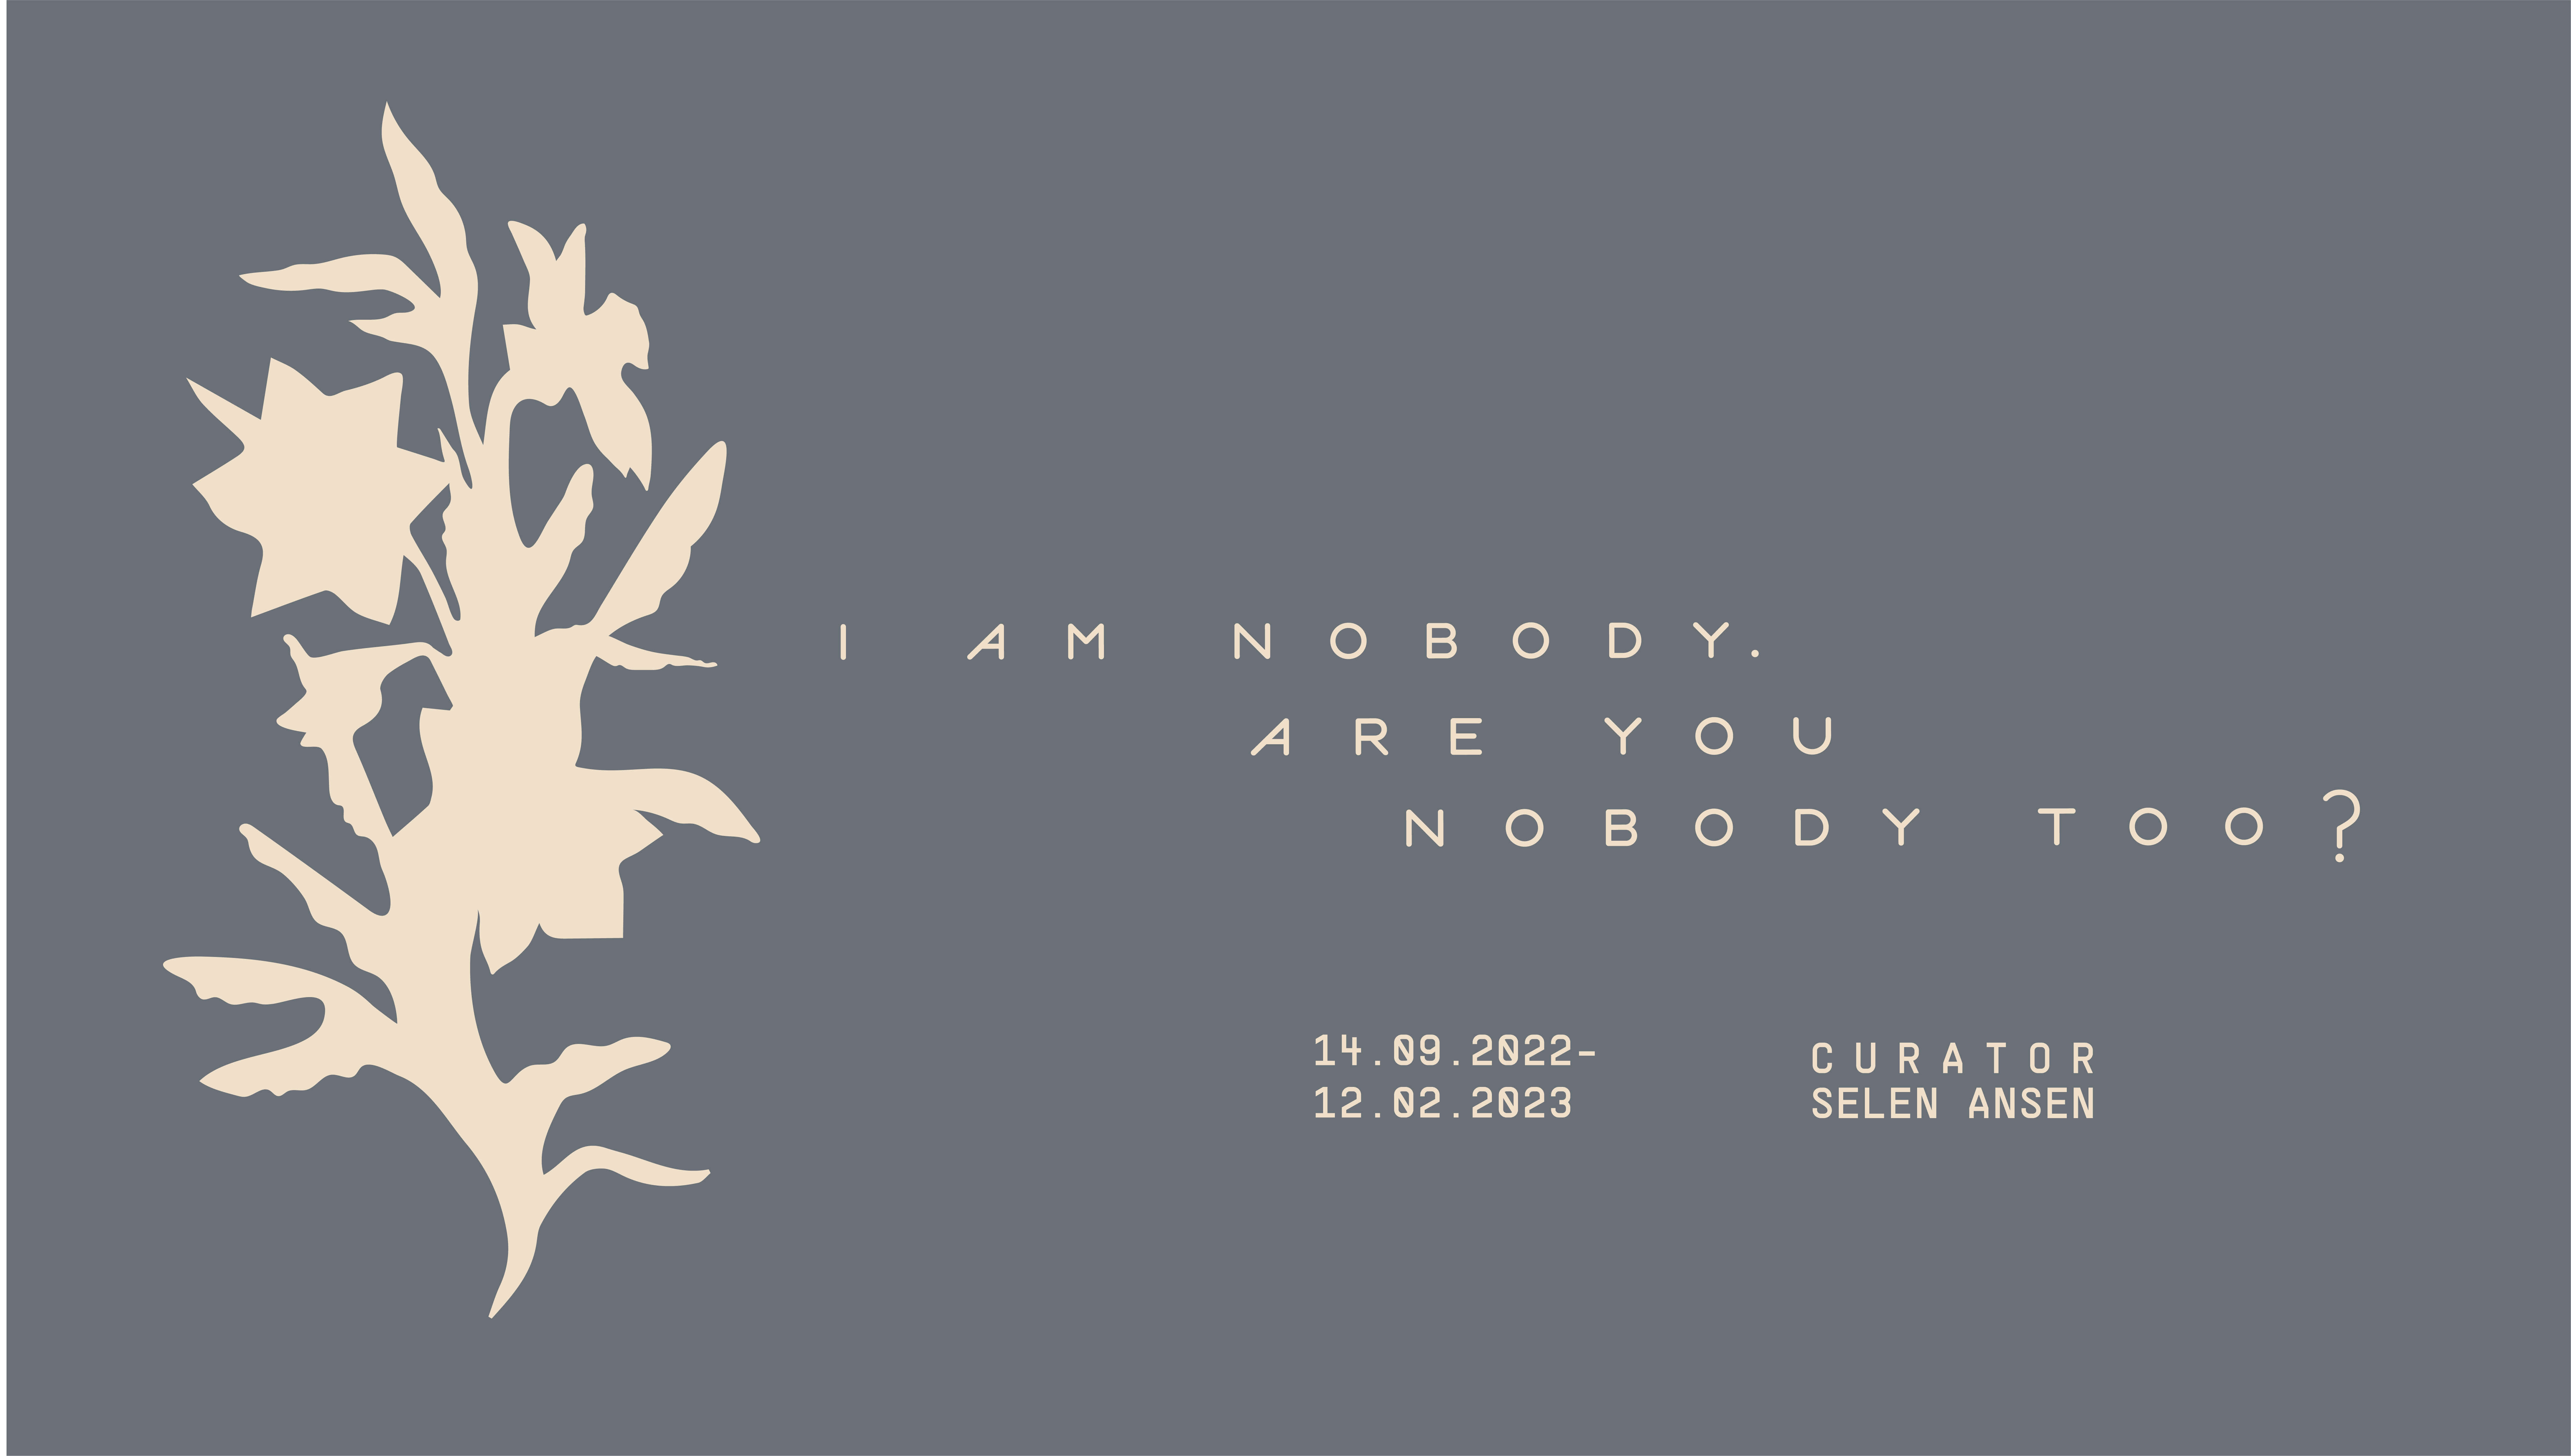 02/11/2022 - Fatoş İrwen & Yaşam Şaşmazer at the exhibition I Am Nobody. Are You Nobody Too? at Meşher